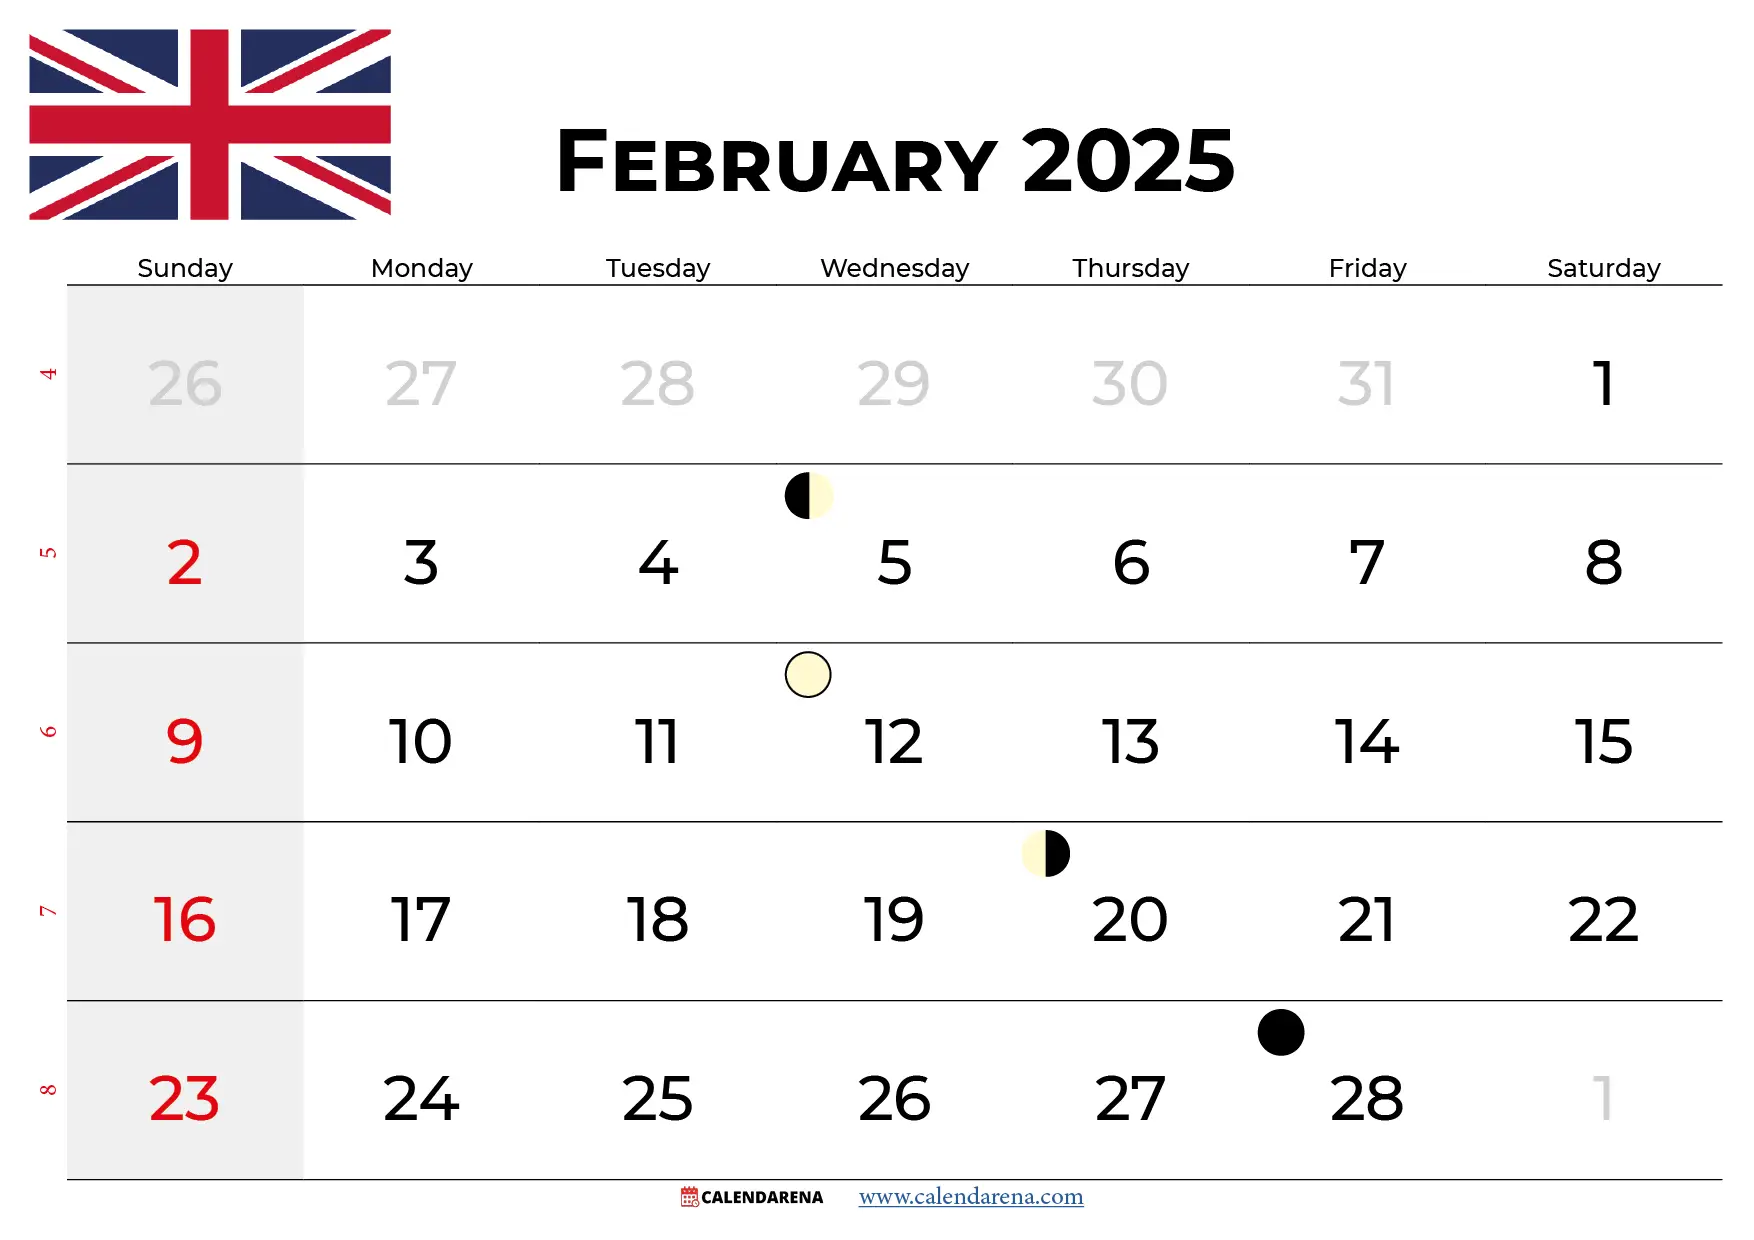 February 2025 Calendar With Holidays uk